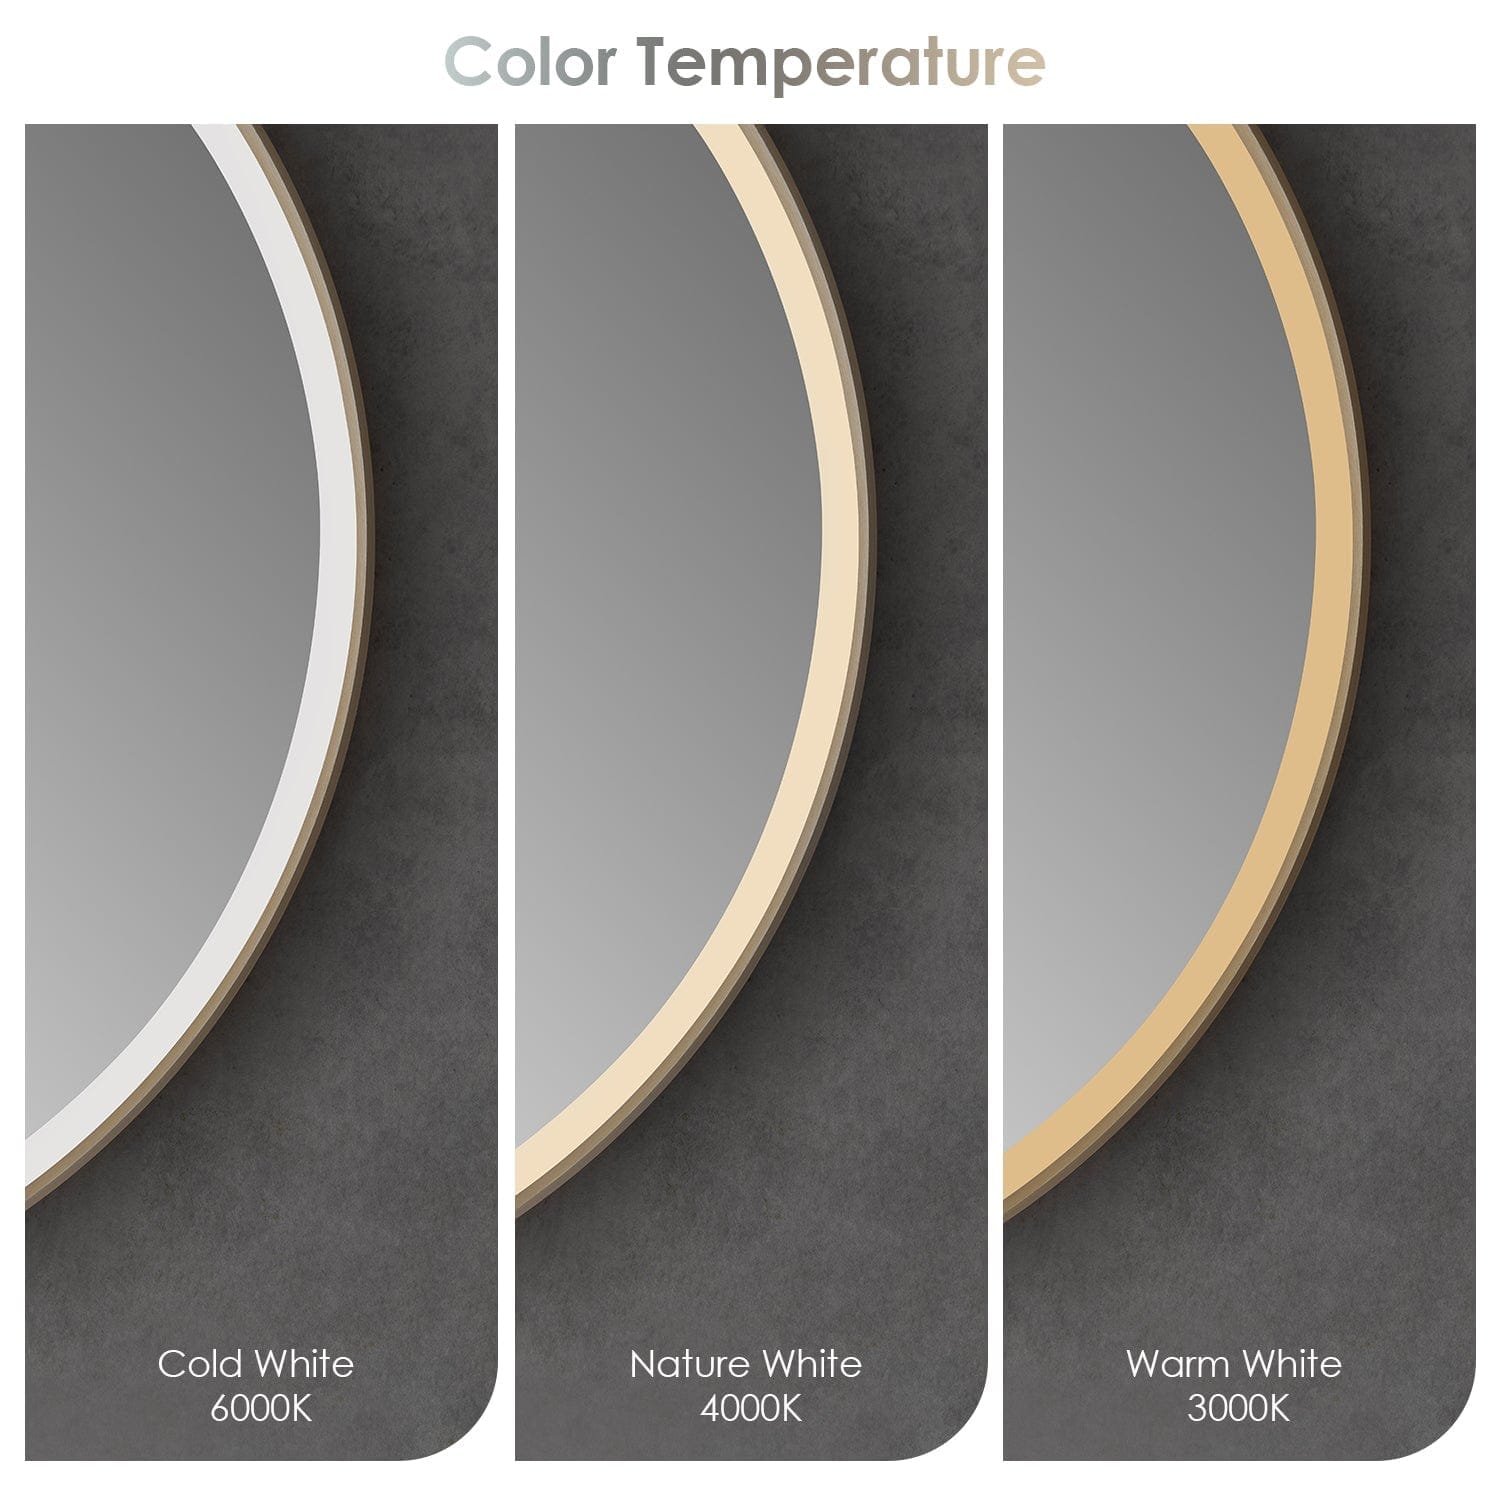 Lighted Bathroom Mirror - Altair Color Temperature Pic